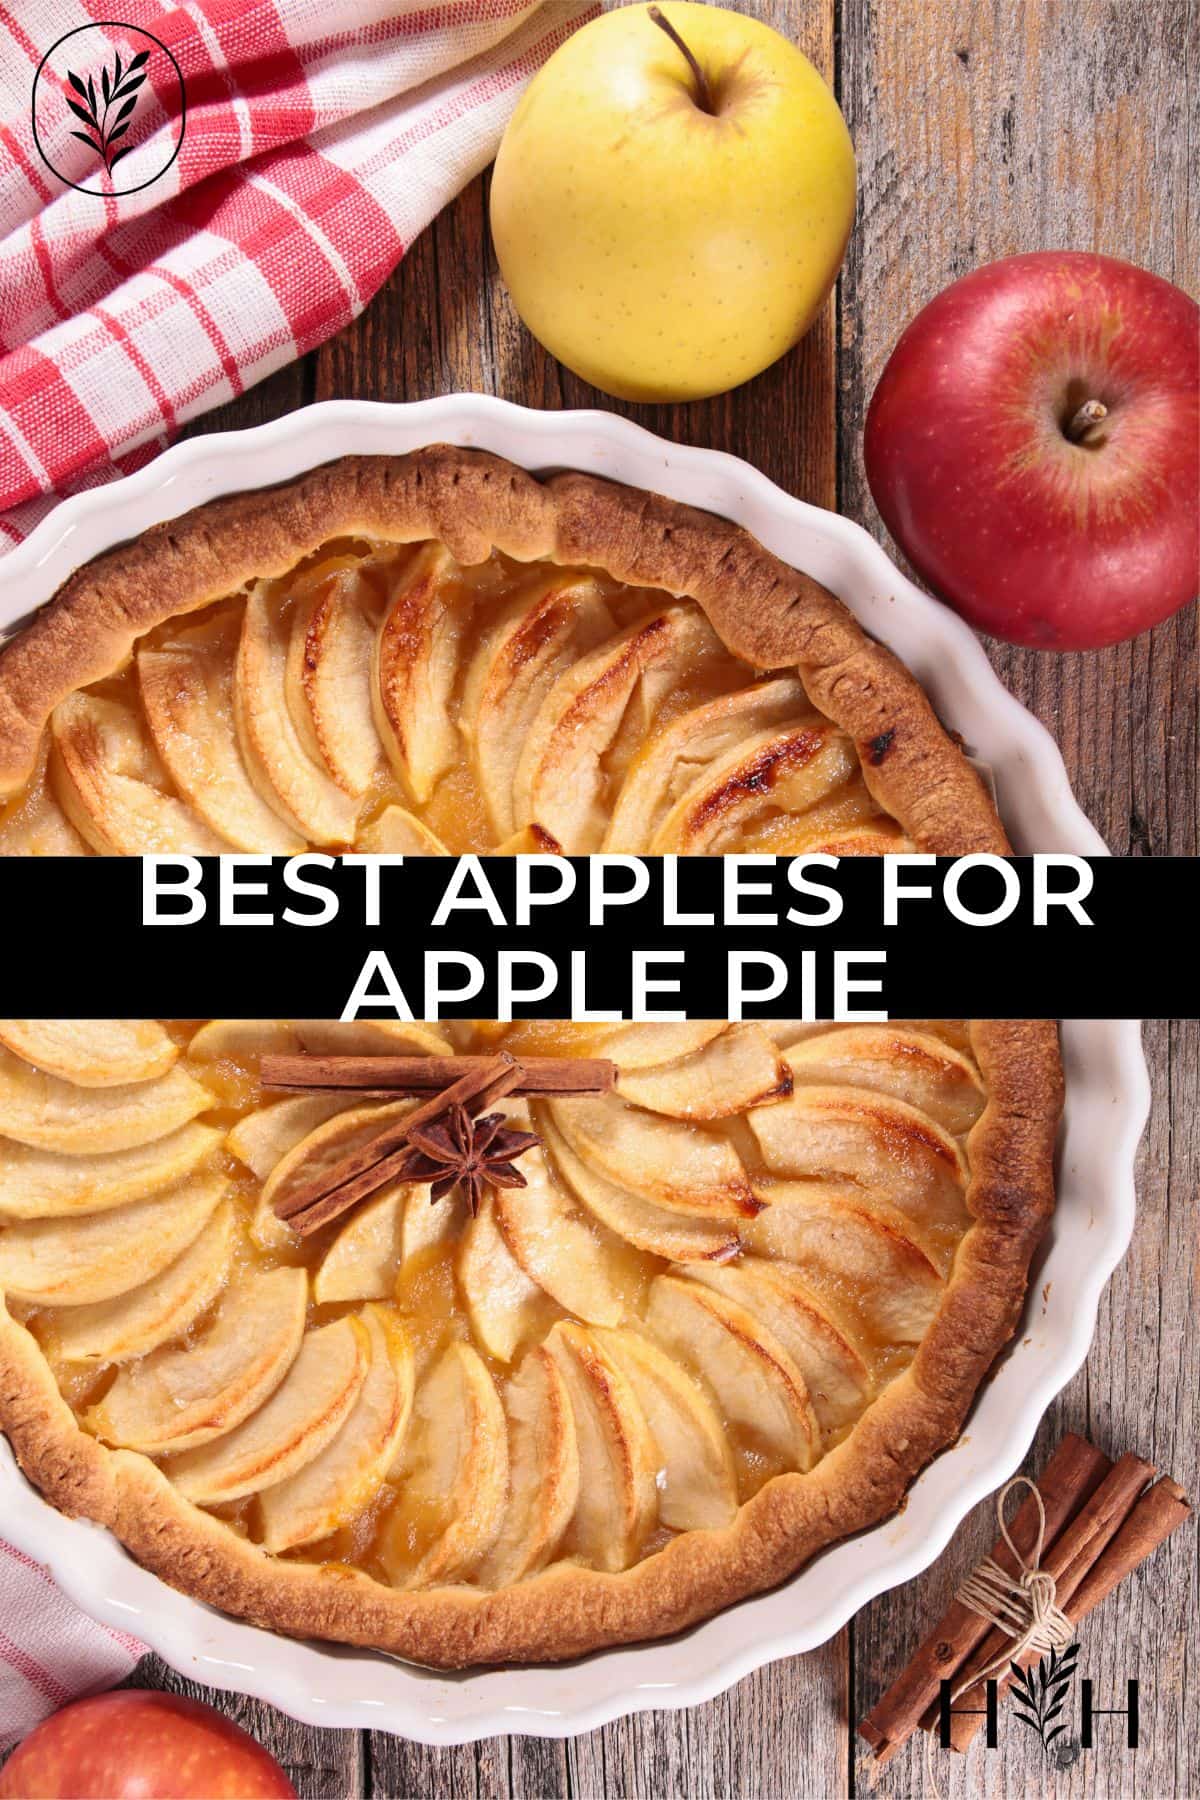 Best apples for apple pie via @home4theharvest